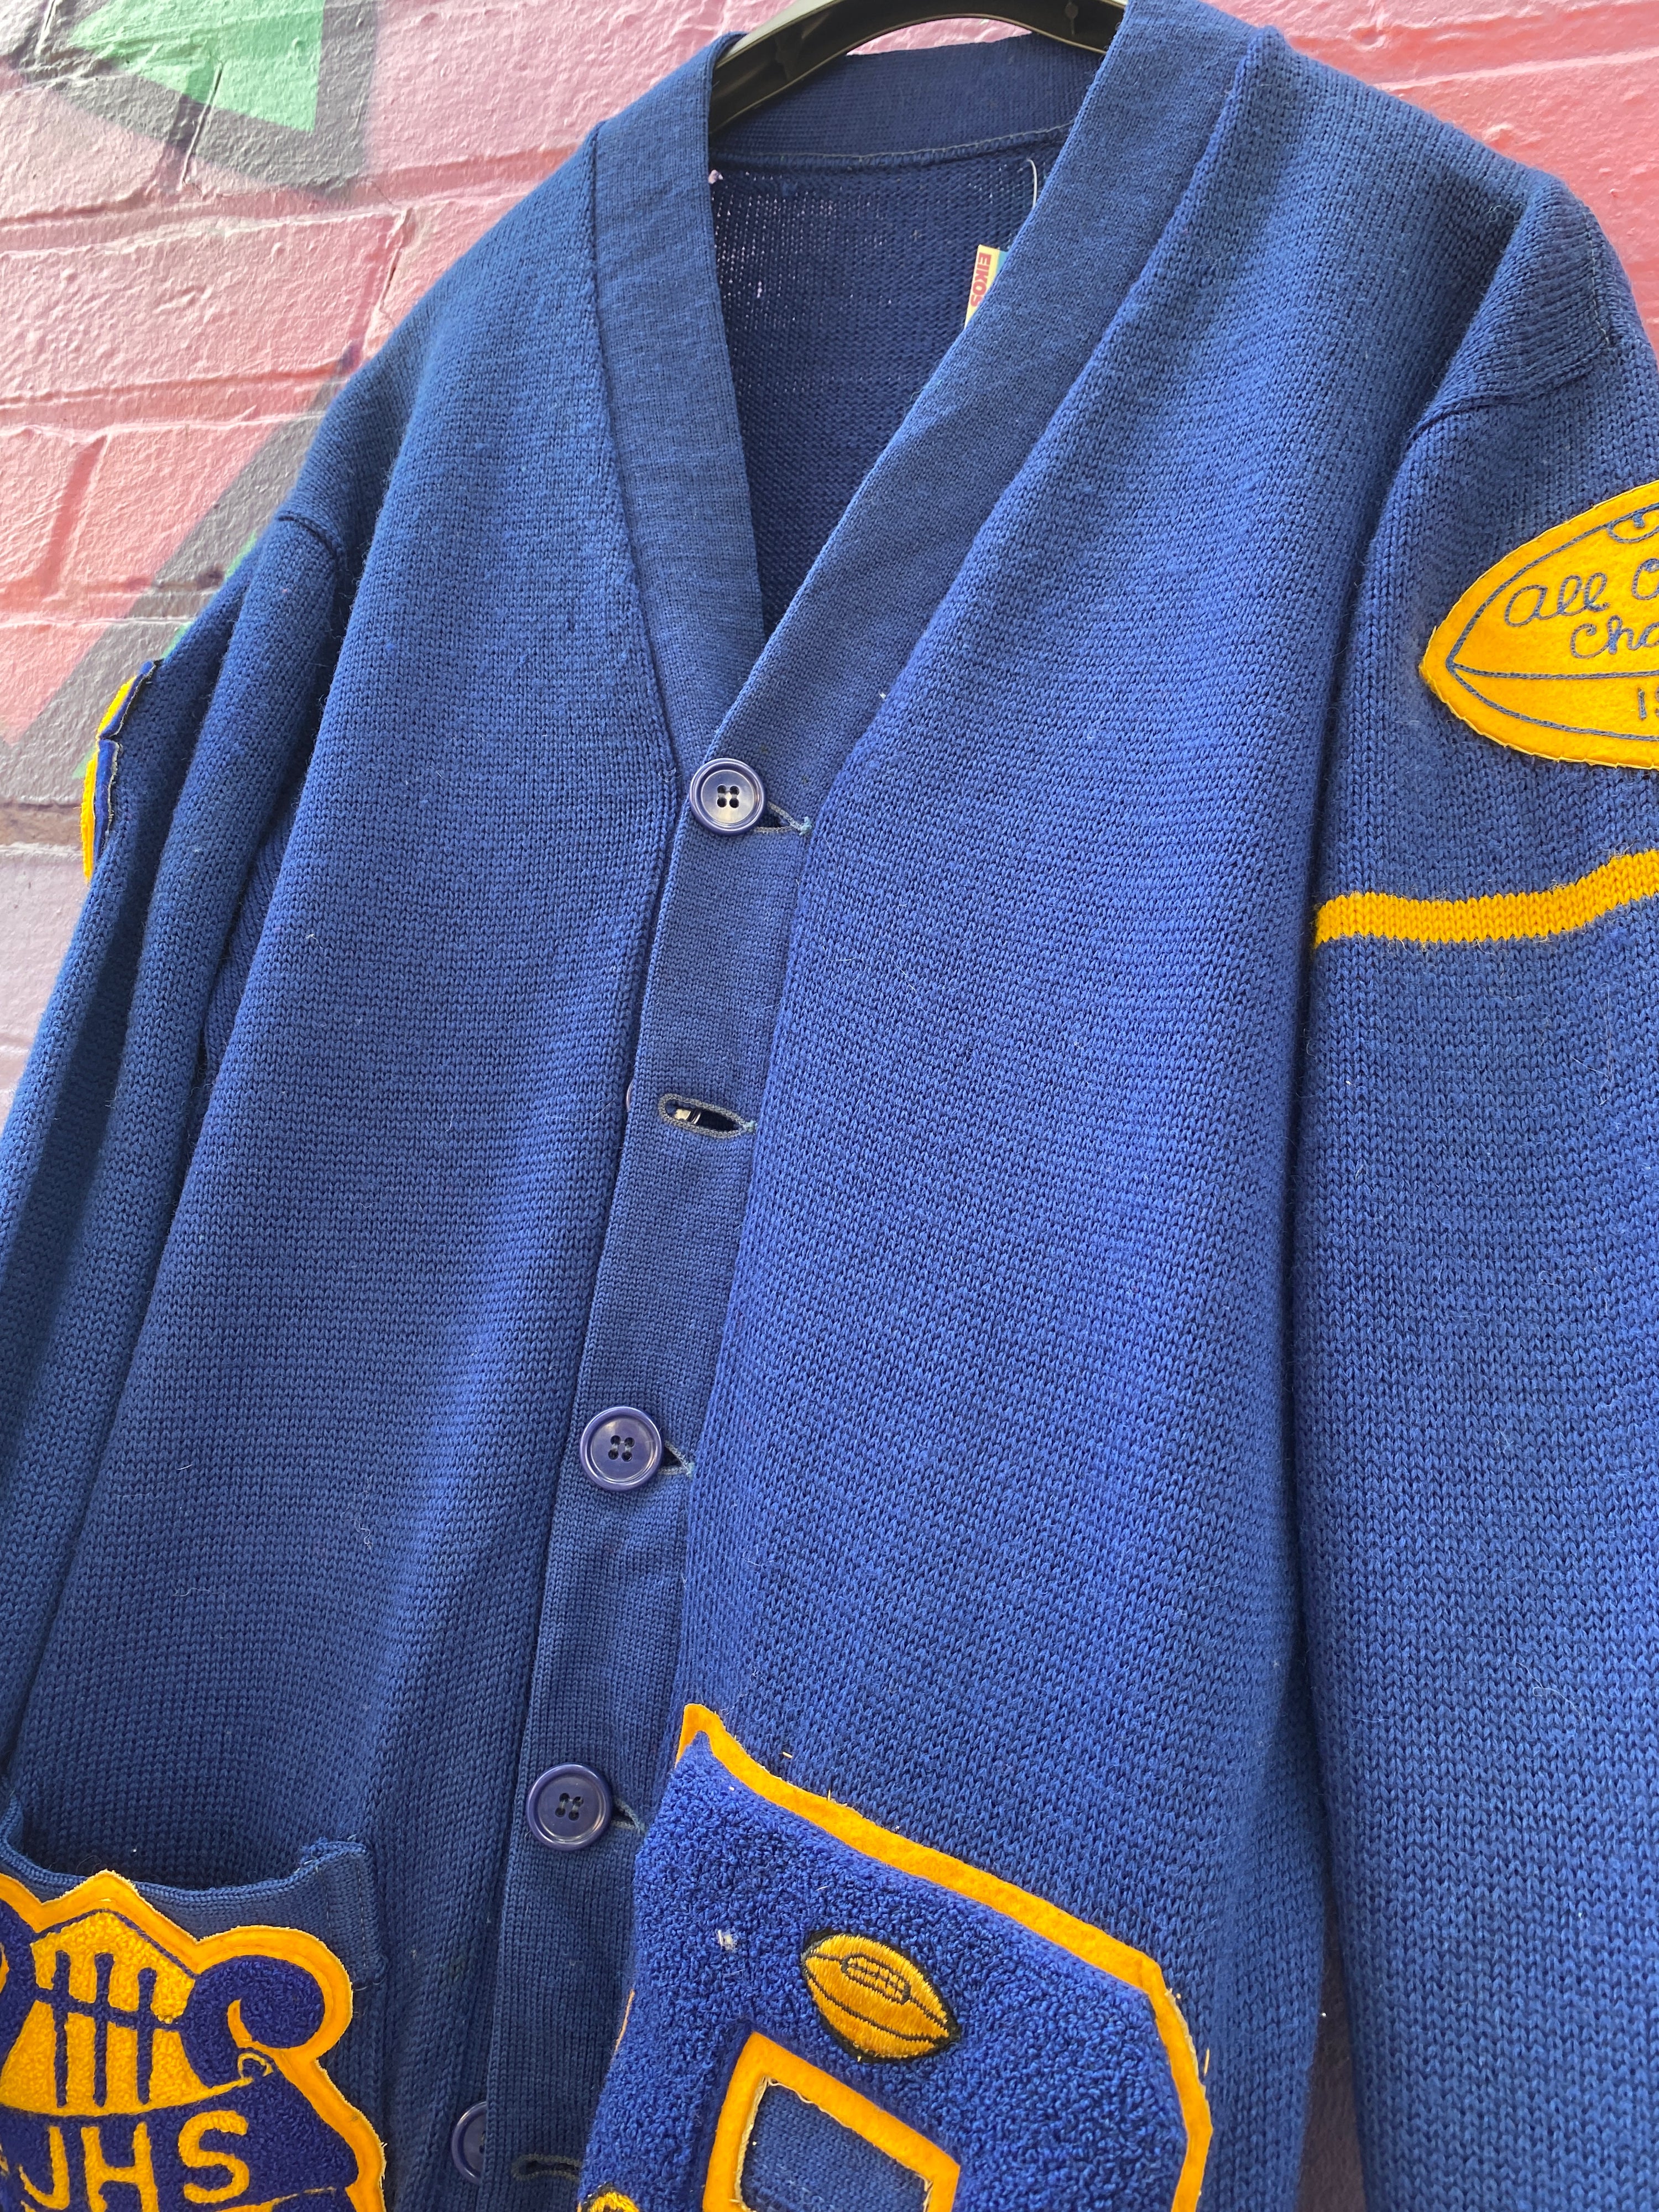 L - All Conference Champion '55-'56 Vintage Knit Cardigan Blue